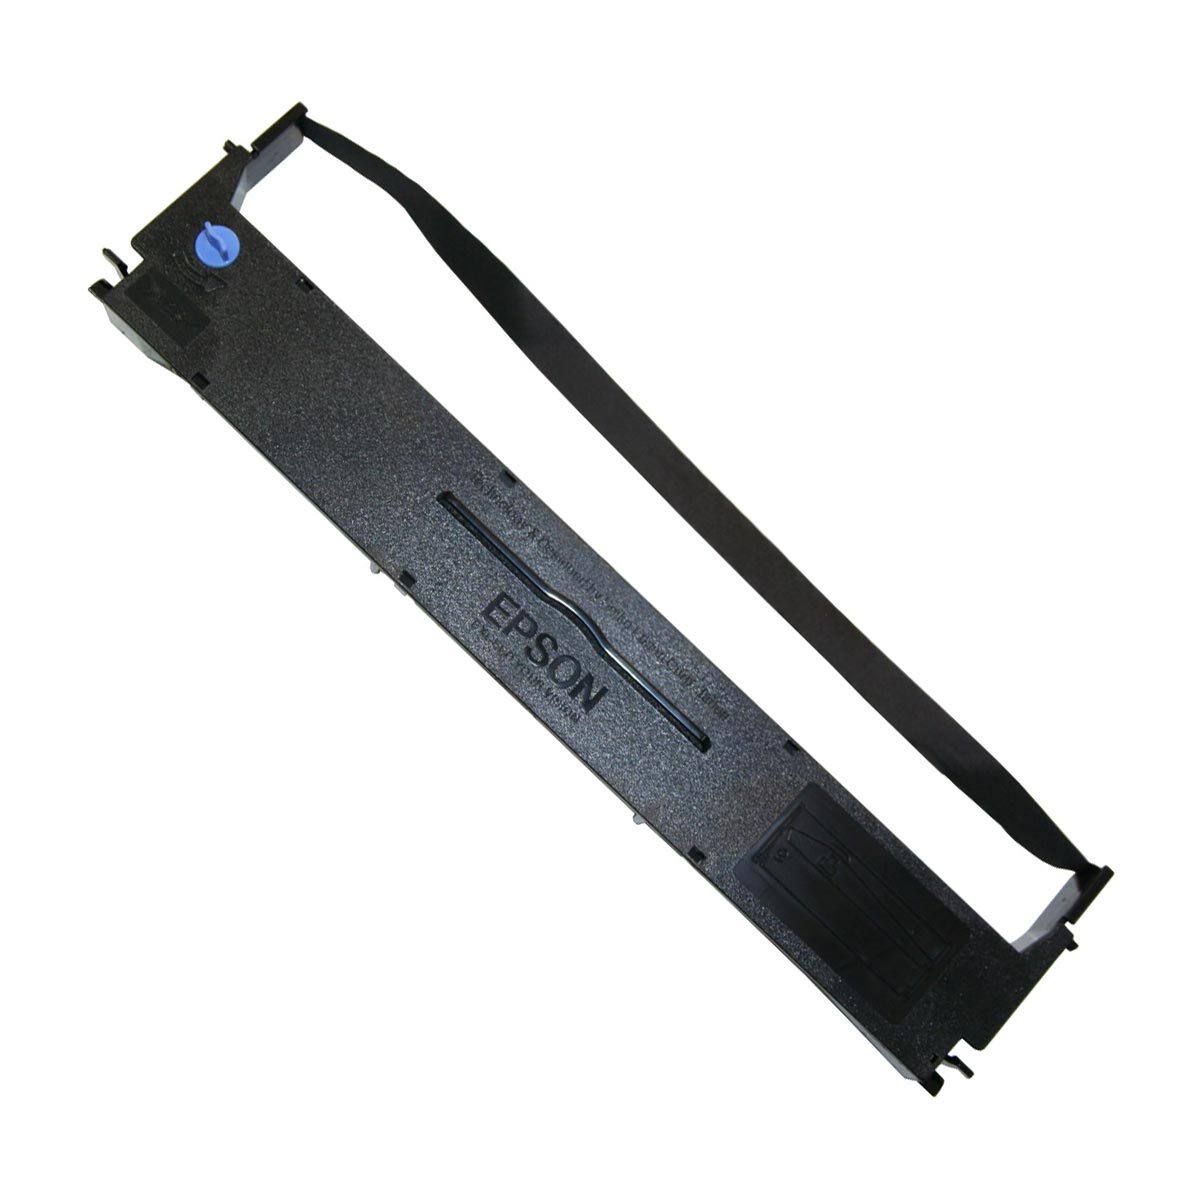 Black Epson Lx 350 Ribbon Cartridge  For Printer